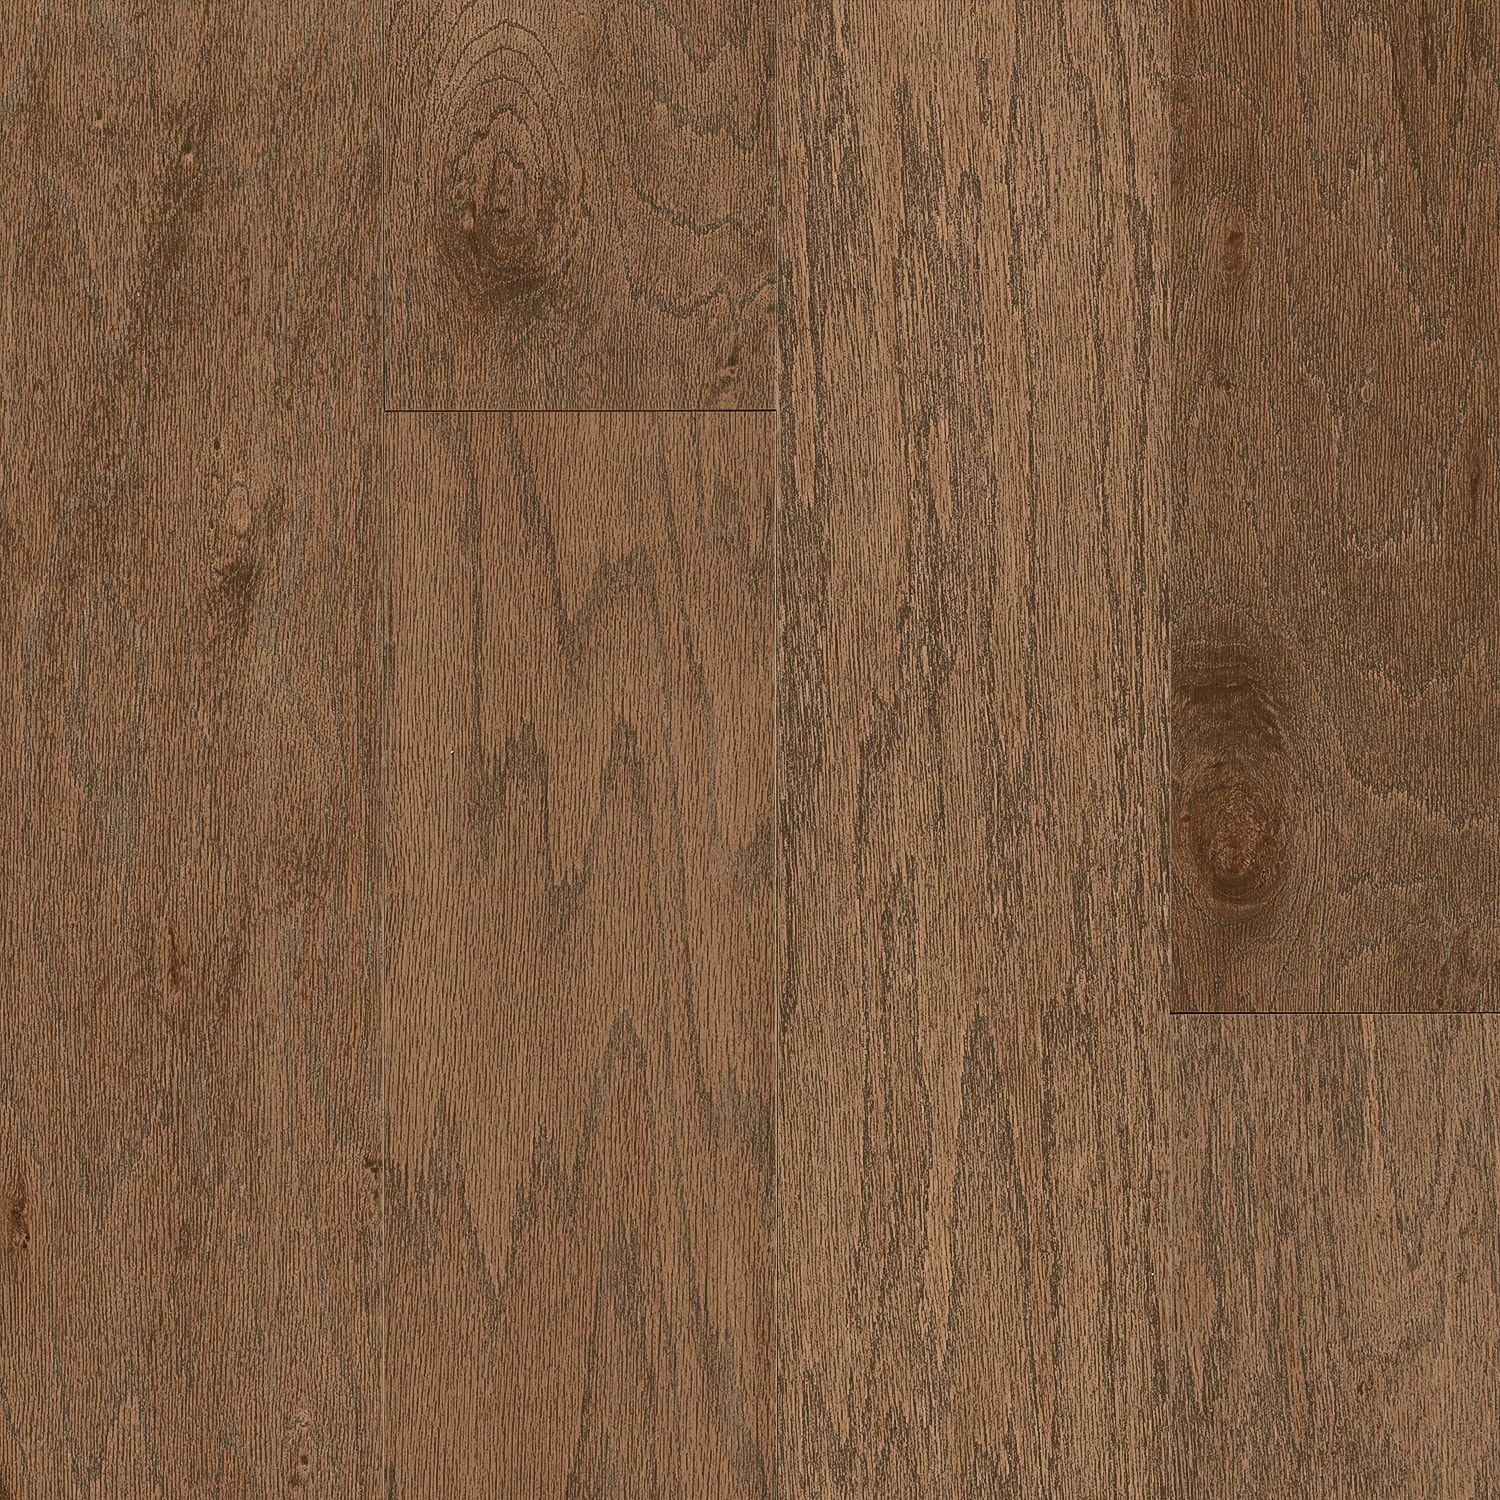 Gunstock hardwood floor